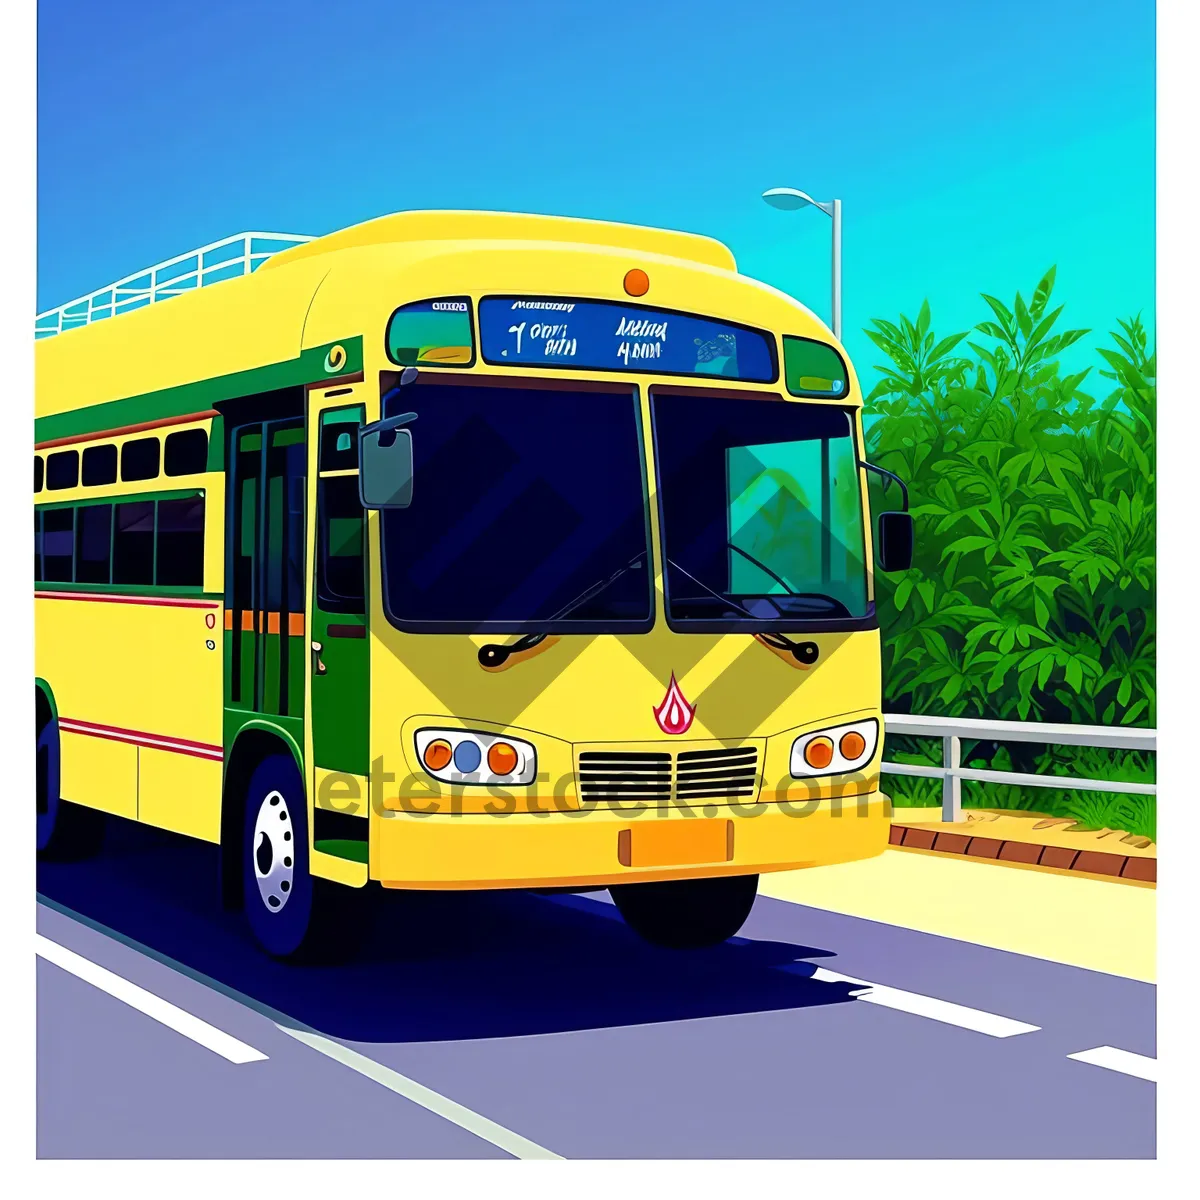 Picture of Efficient Transportation: A Reliable Shuttle Bus